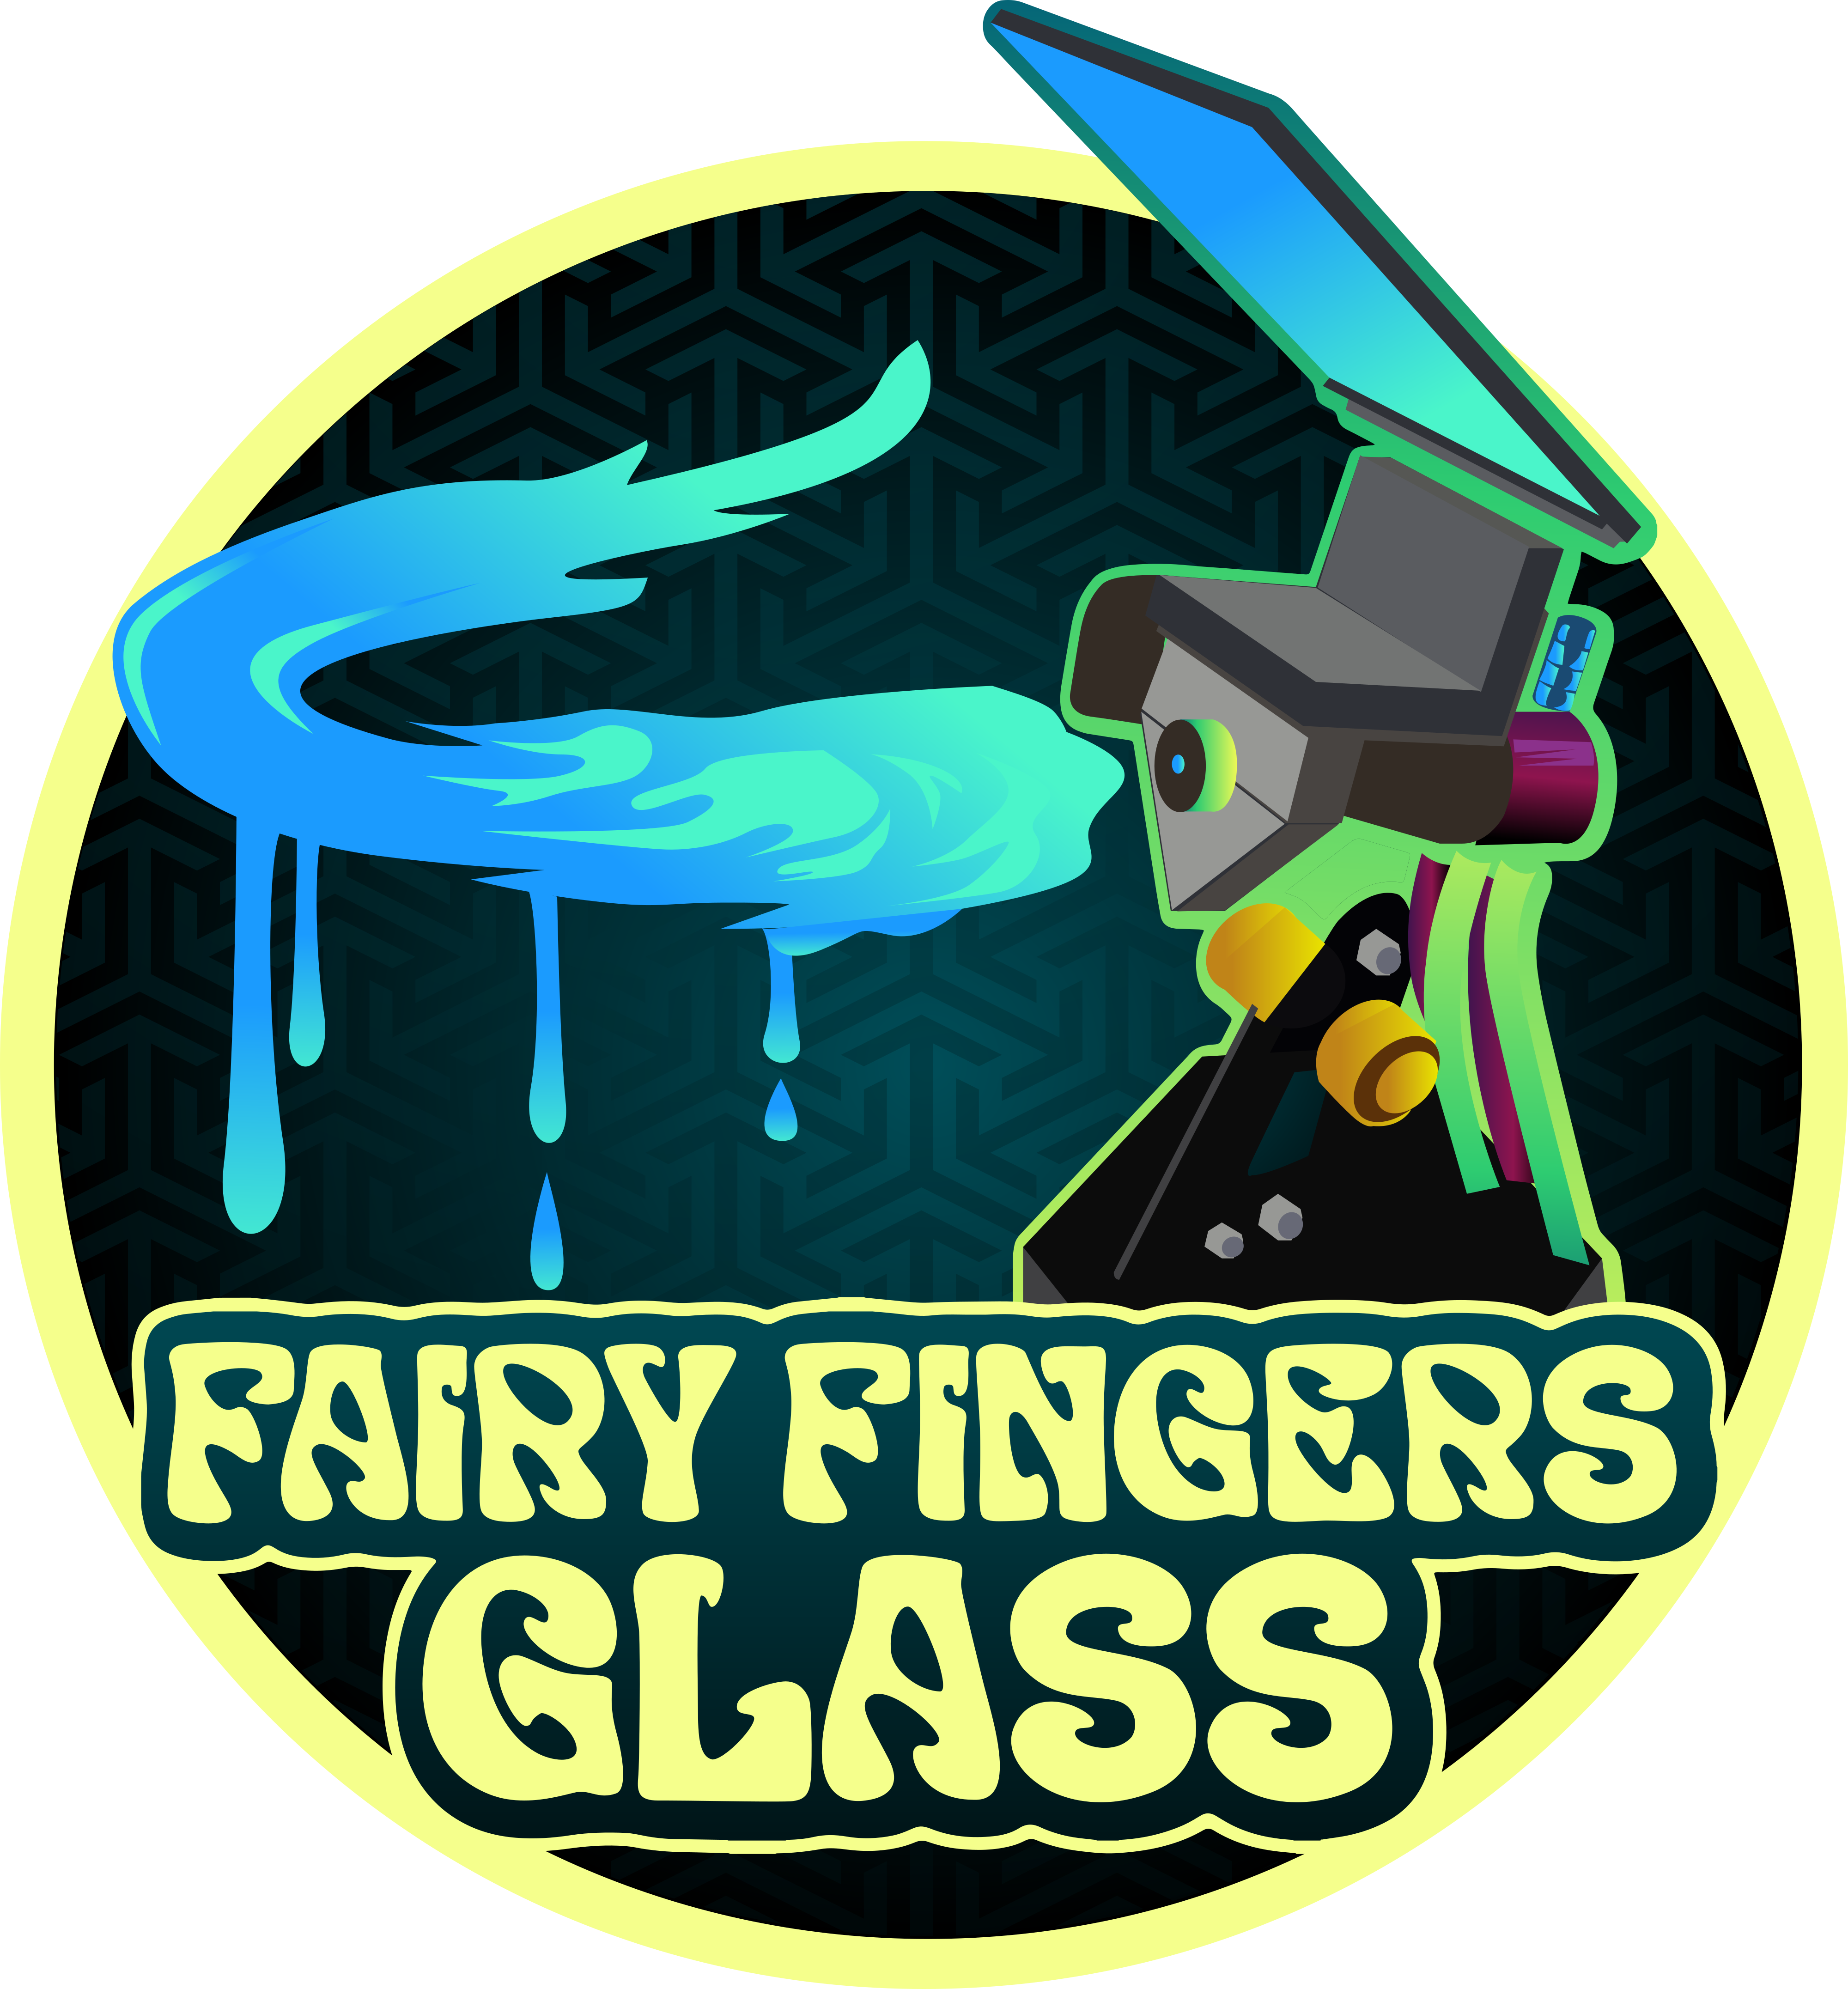 Fairy Fingers Glass